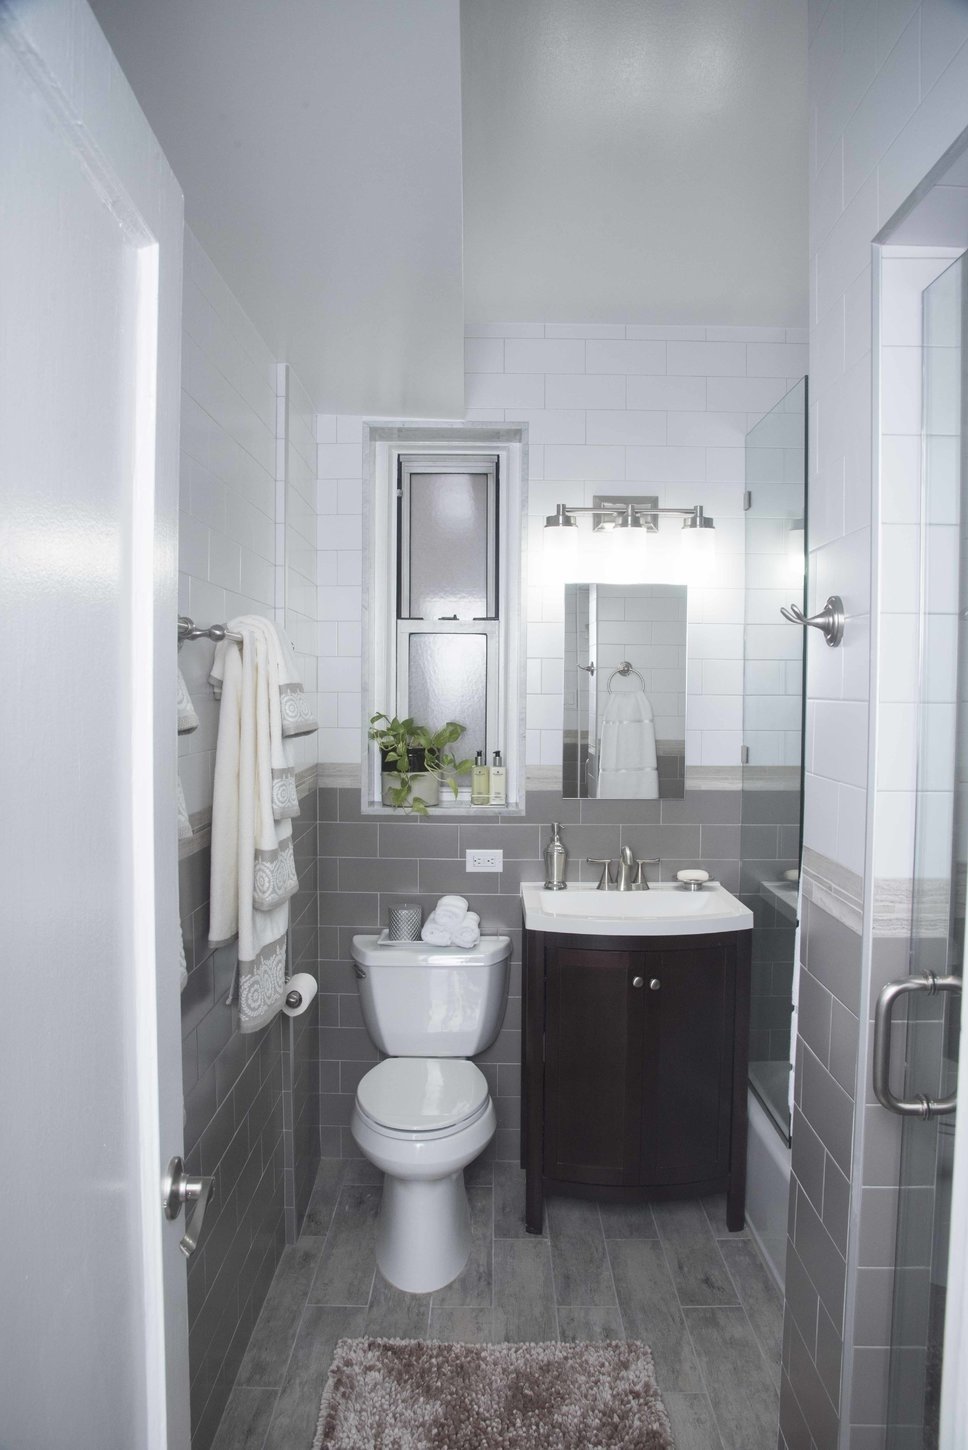 10 Stylish Bathroom Ideas For Small Spaces bathroom traditional tiny bathroom design and ideas how to decor 2022